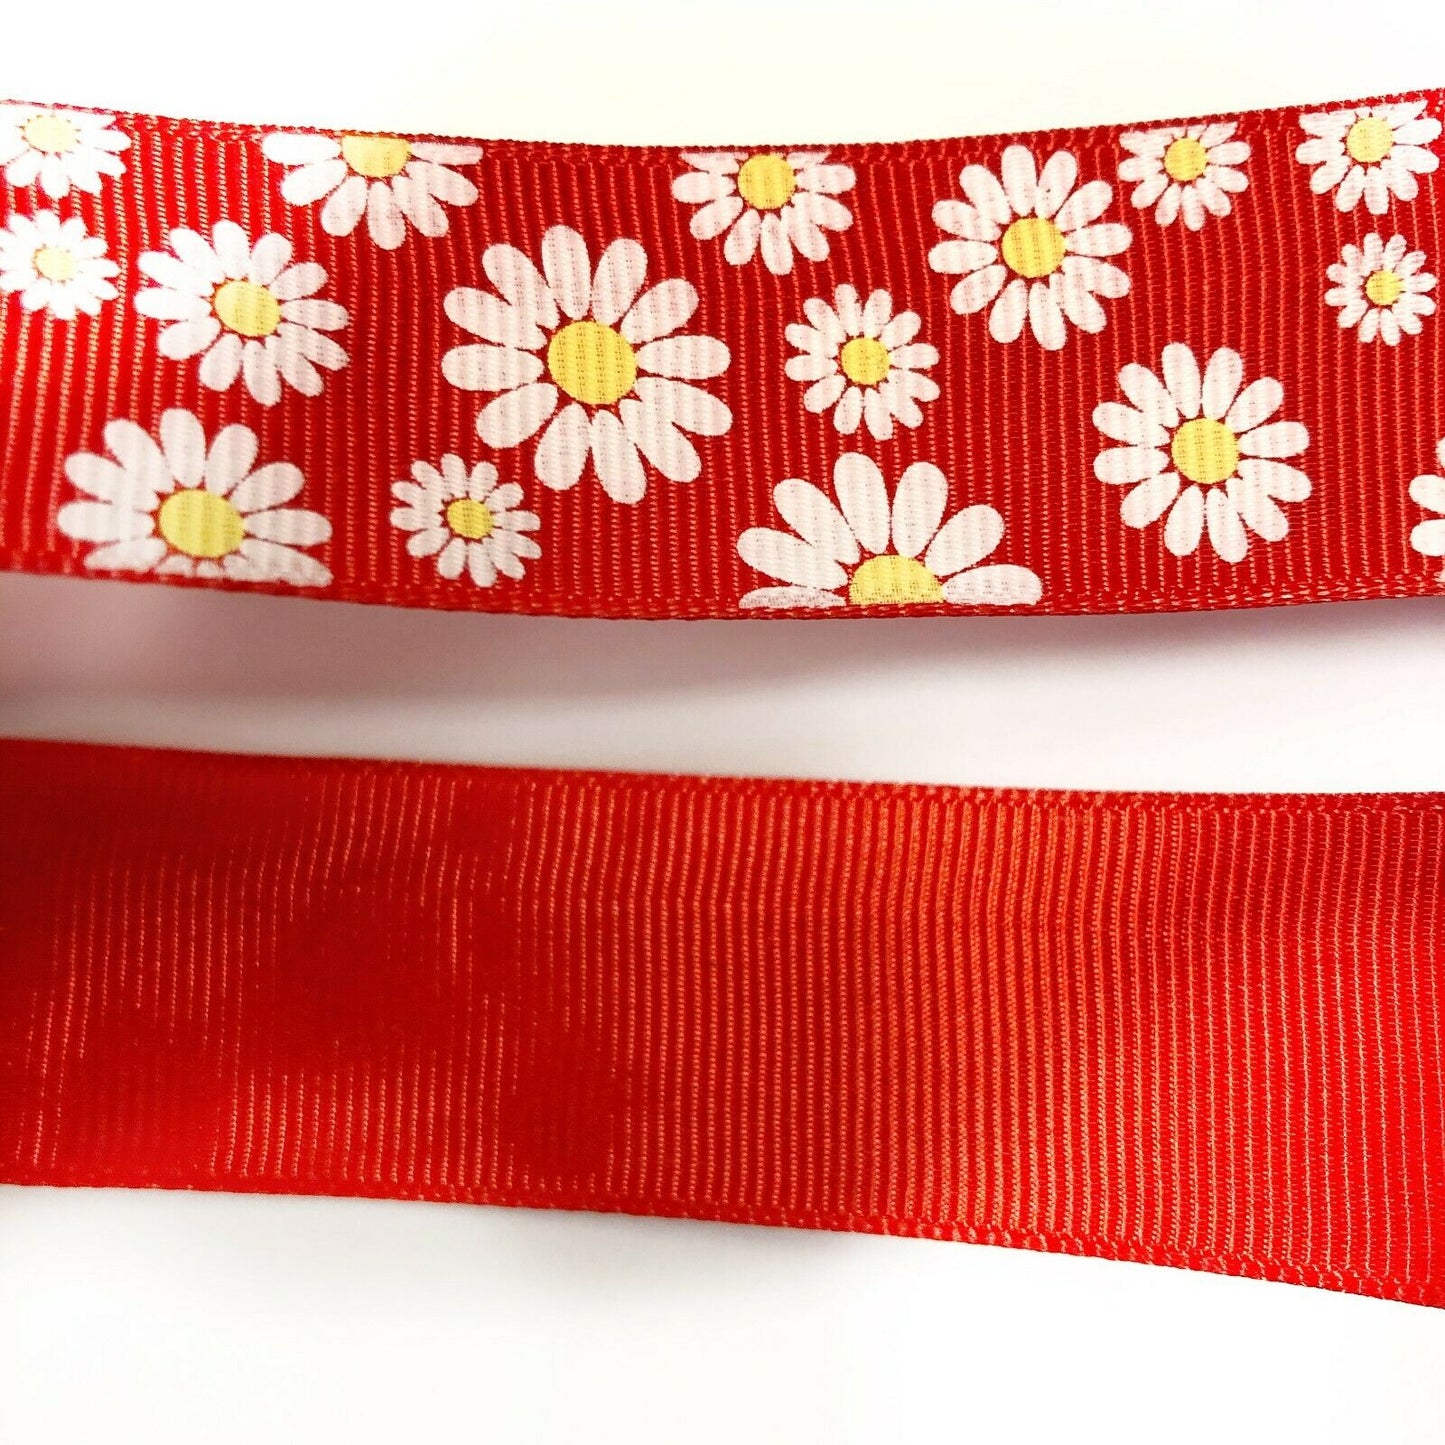 Easter Grosgrain Ribbon 25mm x 1m Cut Length Daisy Flower Print For Bow Making